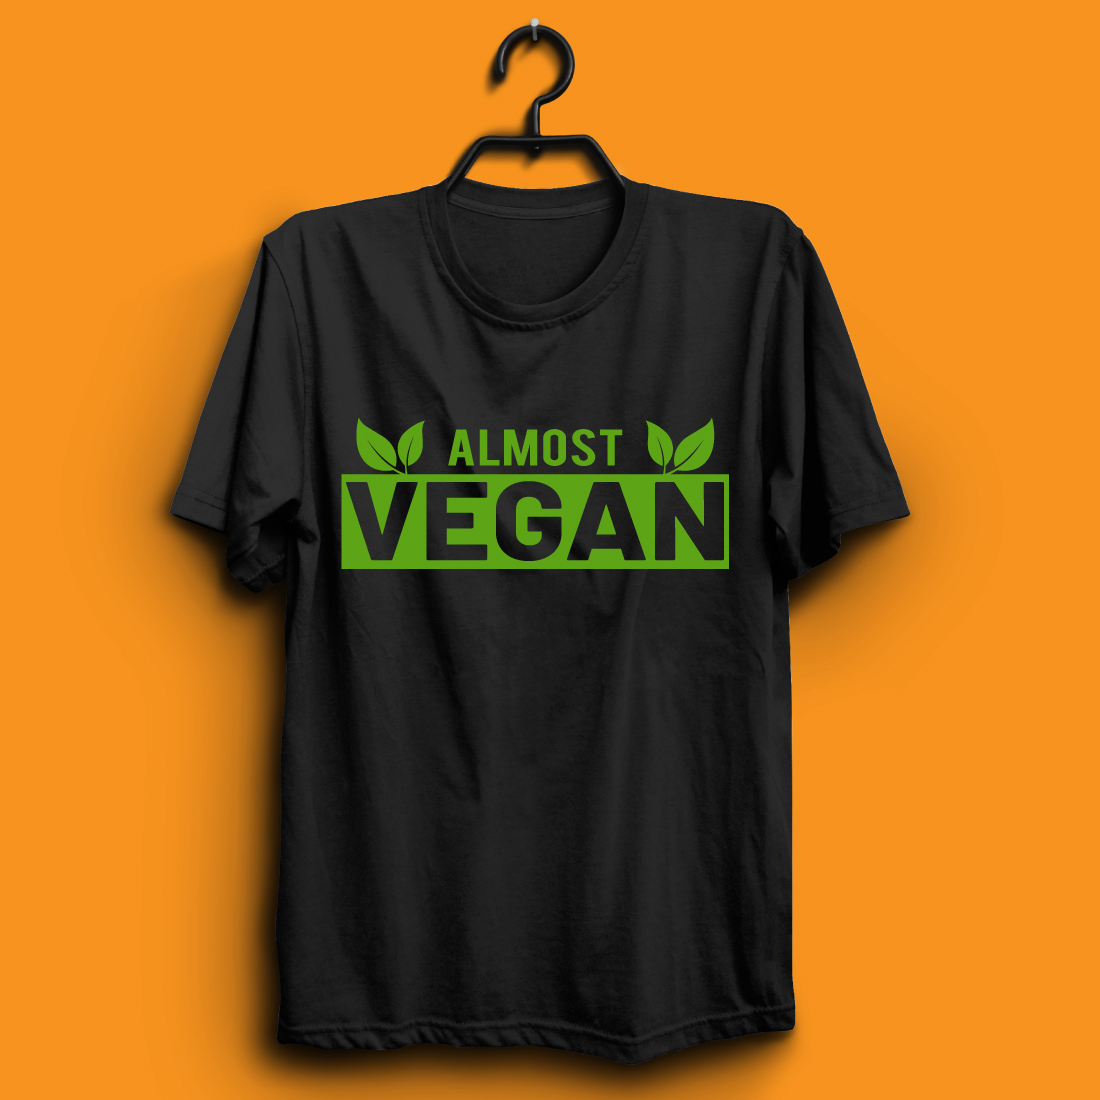 world vegan day t shirt design05 217